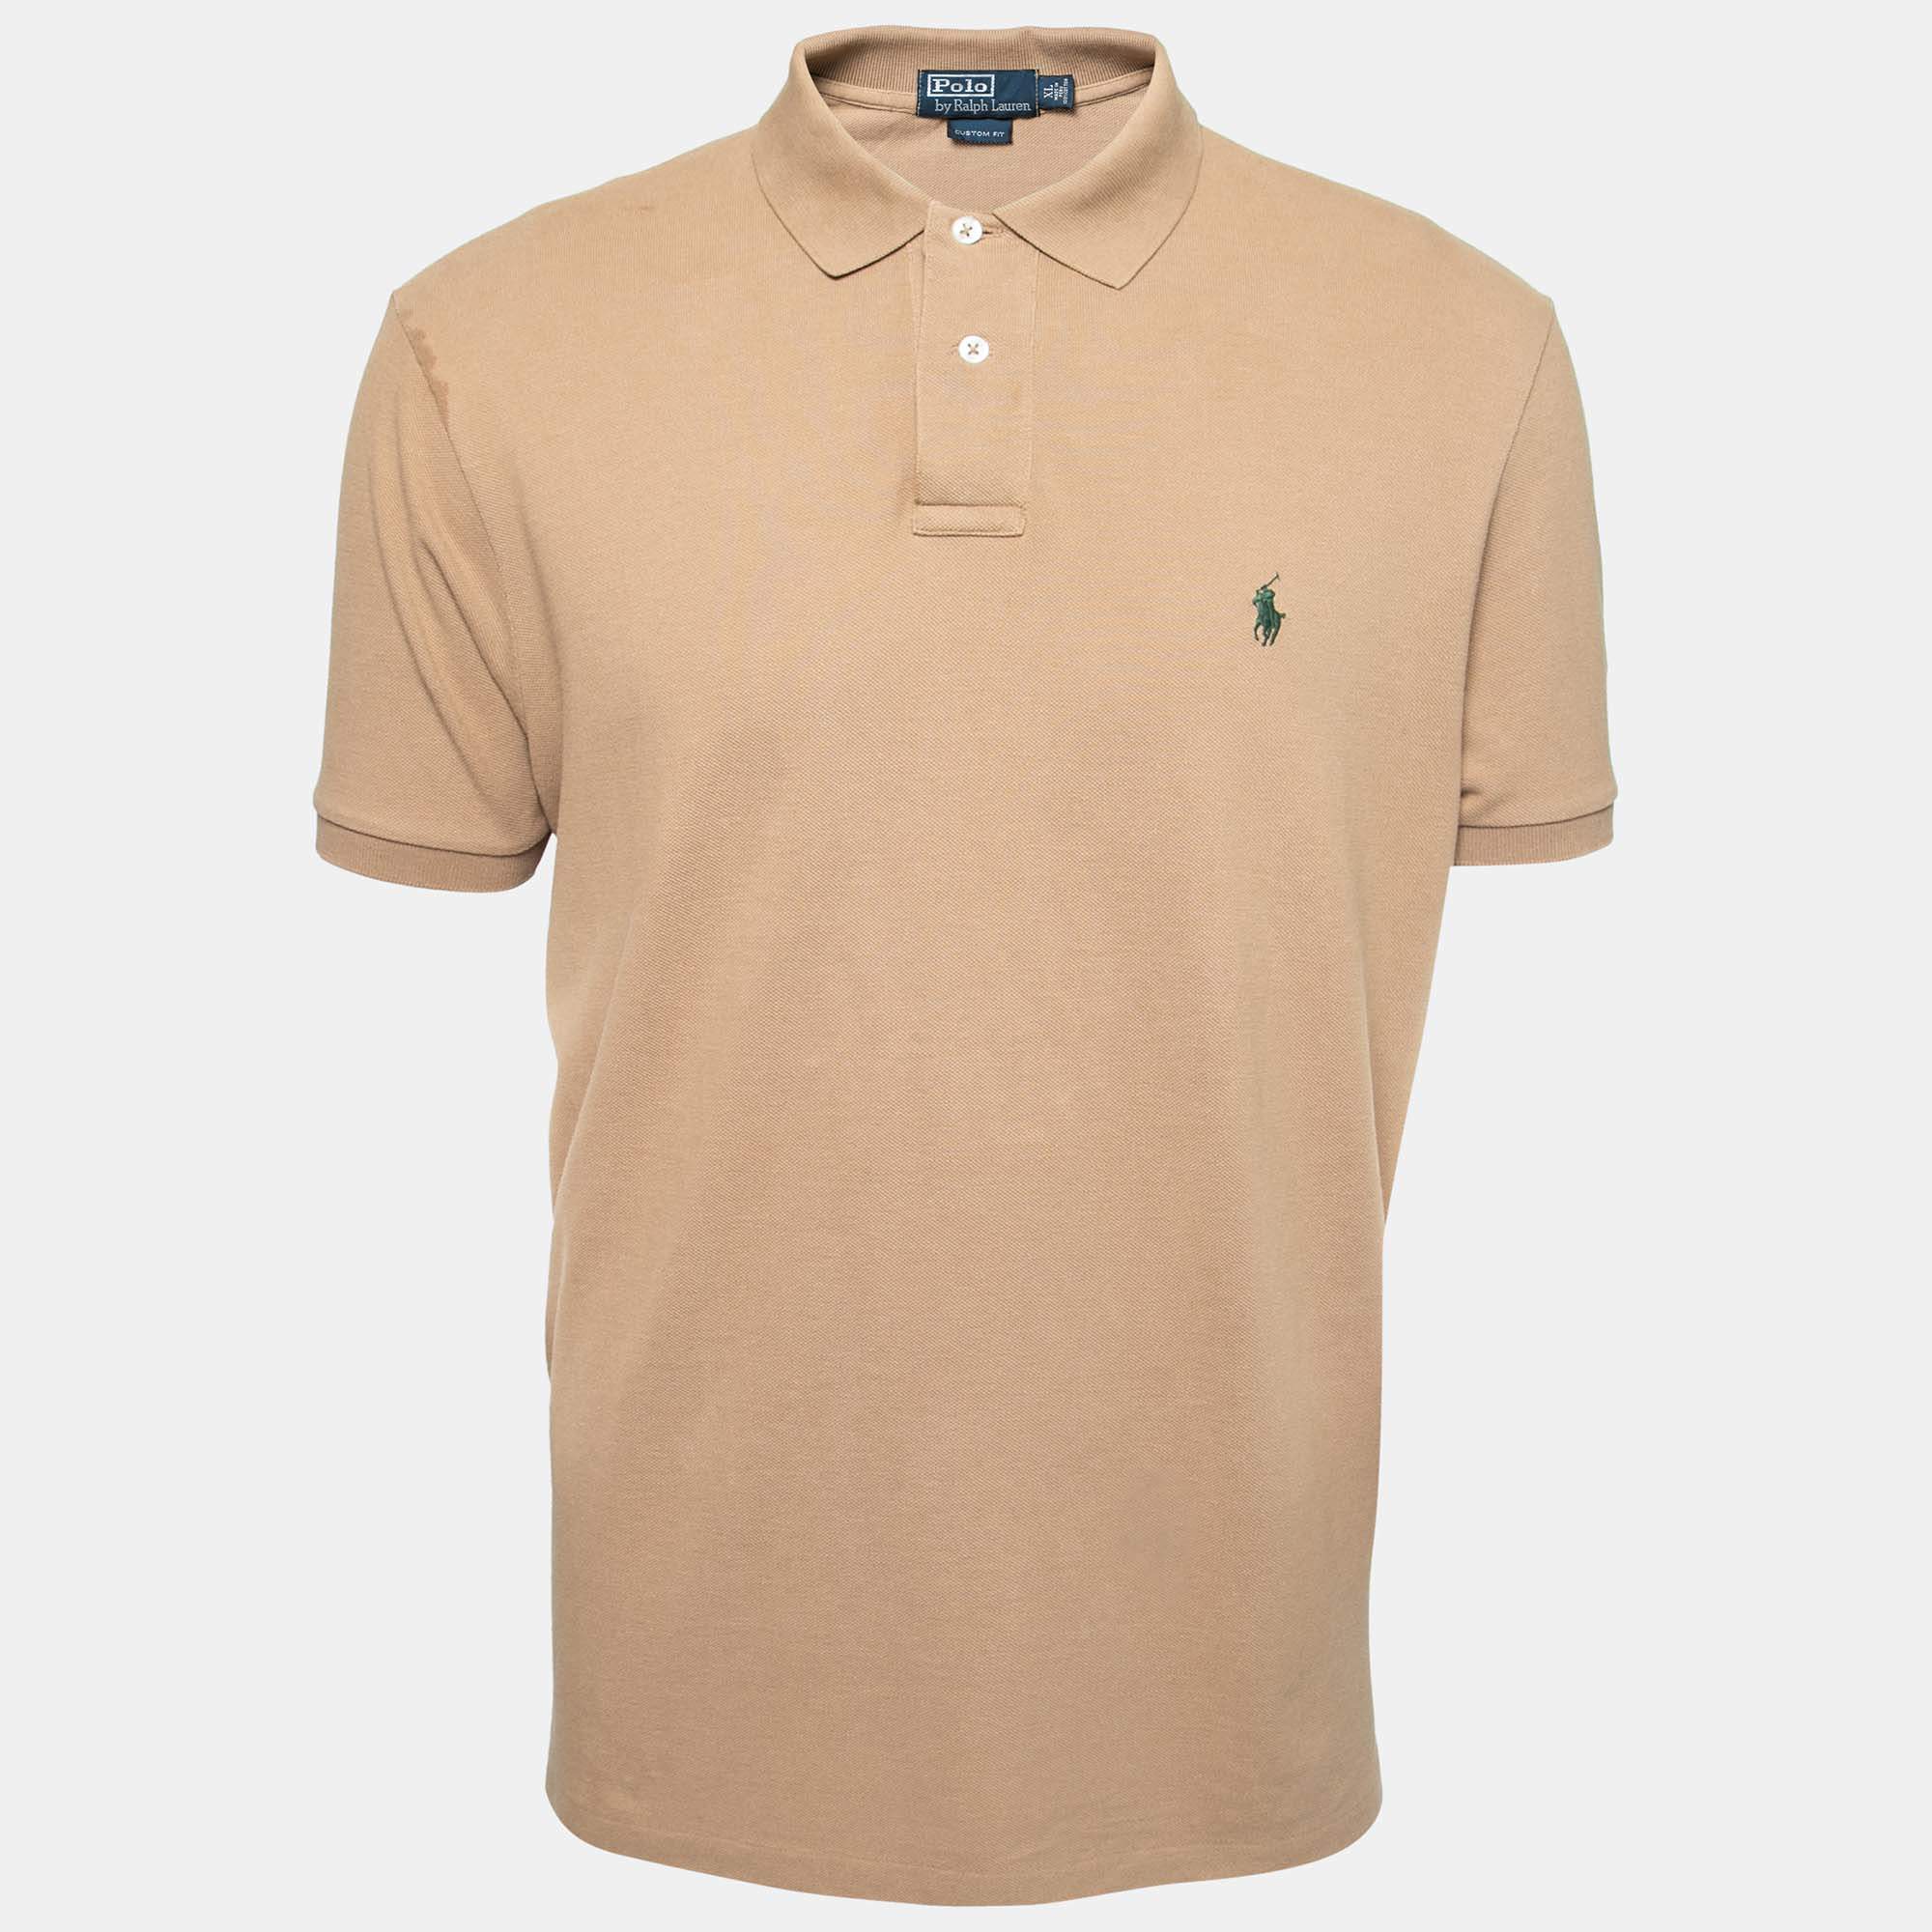 Polo Ralph Lauren Brown Cotton Polo T-Shirt XL